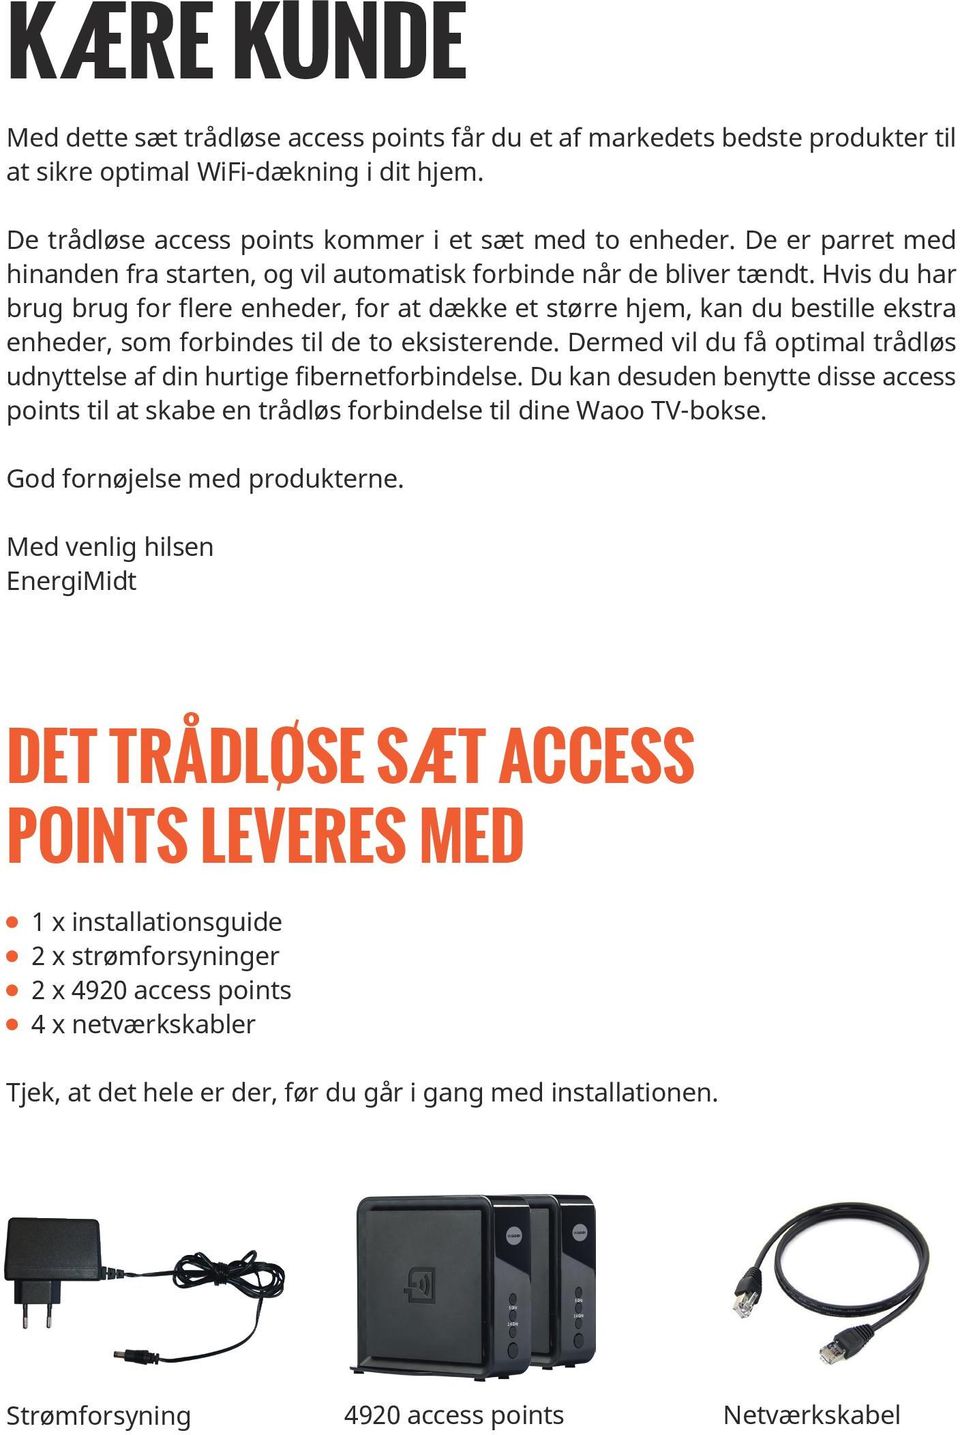 INSTALLATIONS GUIDE. Air 4920 Trådløst access point FIBERBREDBÅND TV  TELEFONI - PDF Gratis download